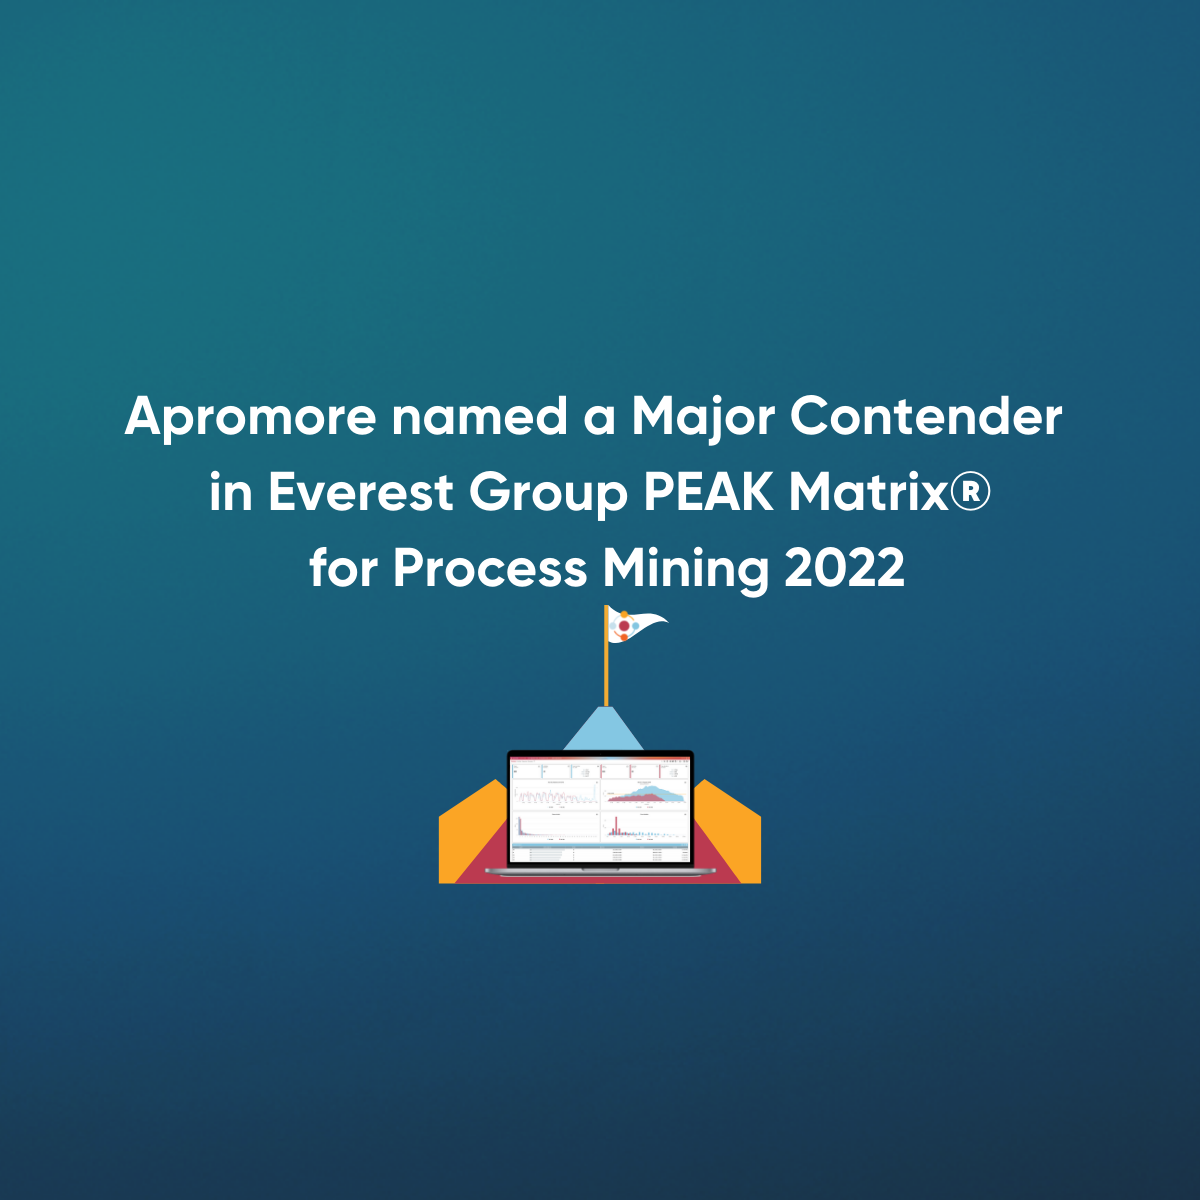 Apromore Named a Major Contender in Everest Group PEAK Matrix® Assessment for Process Mining